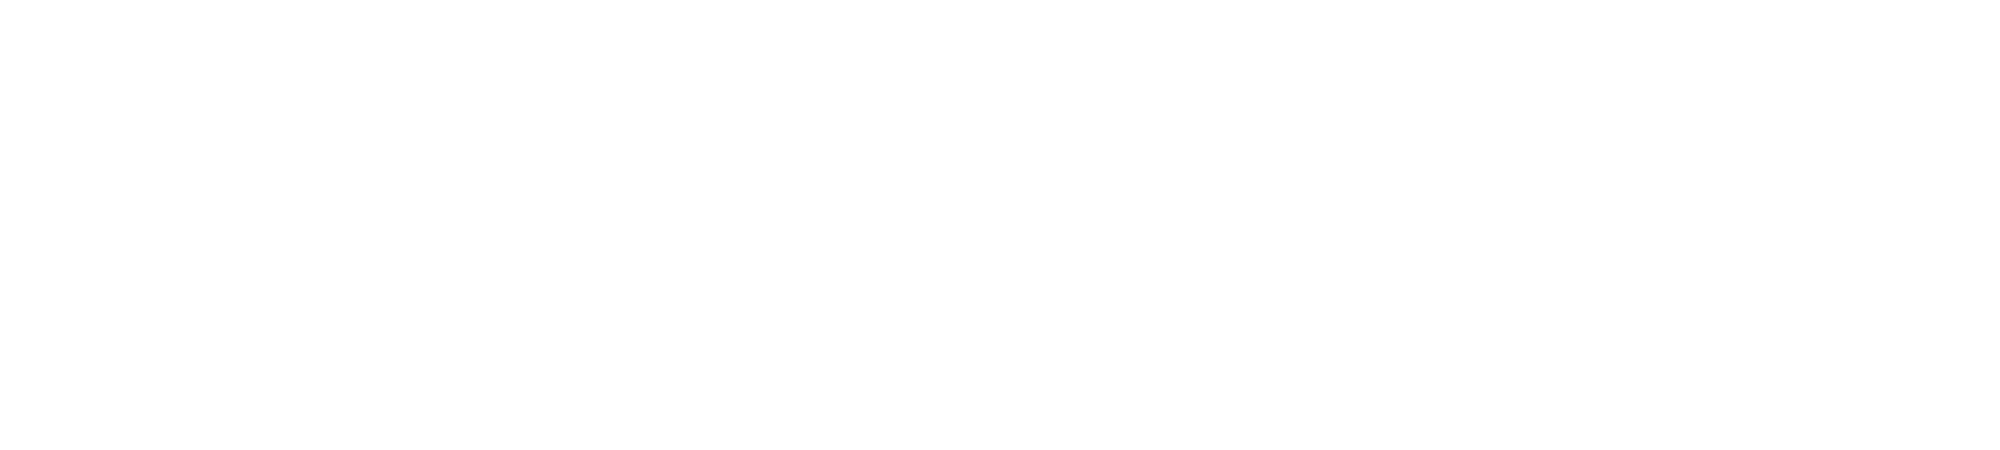 fiege logo white